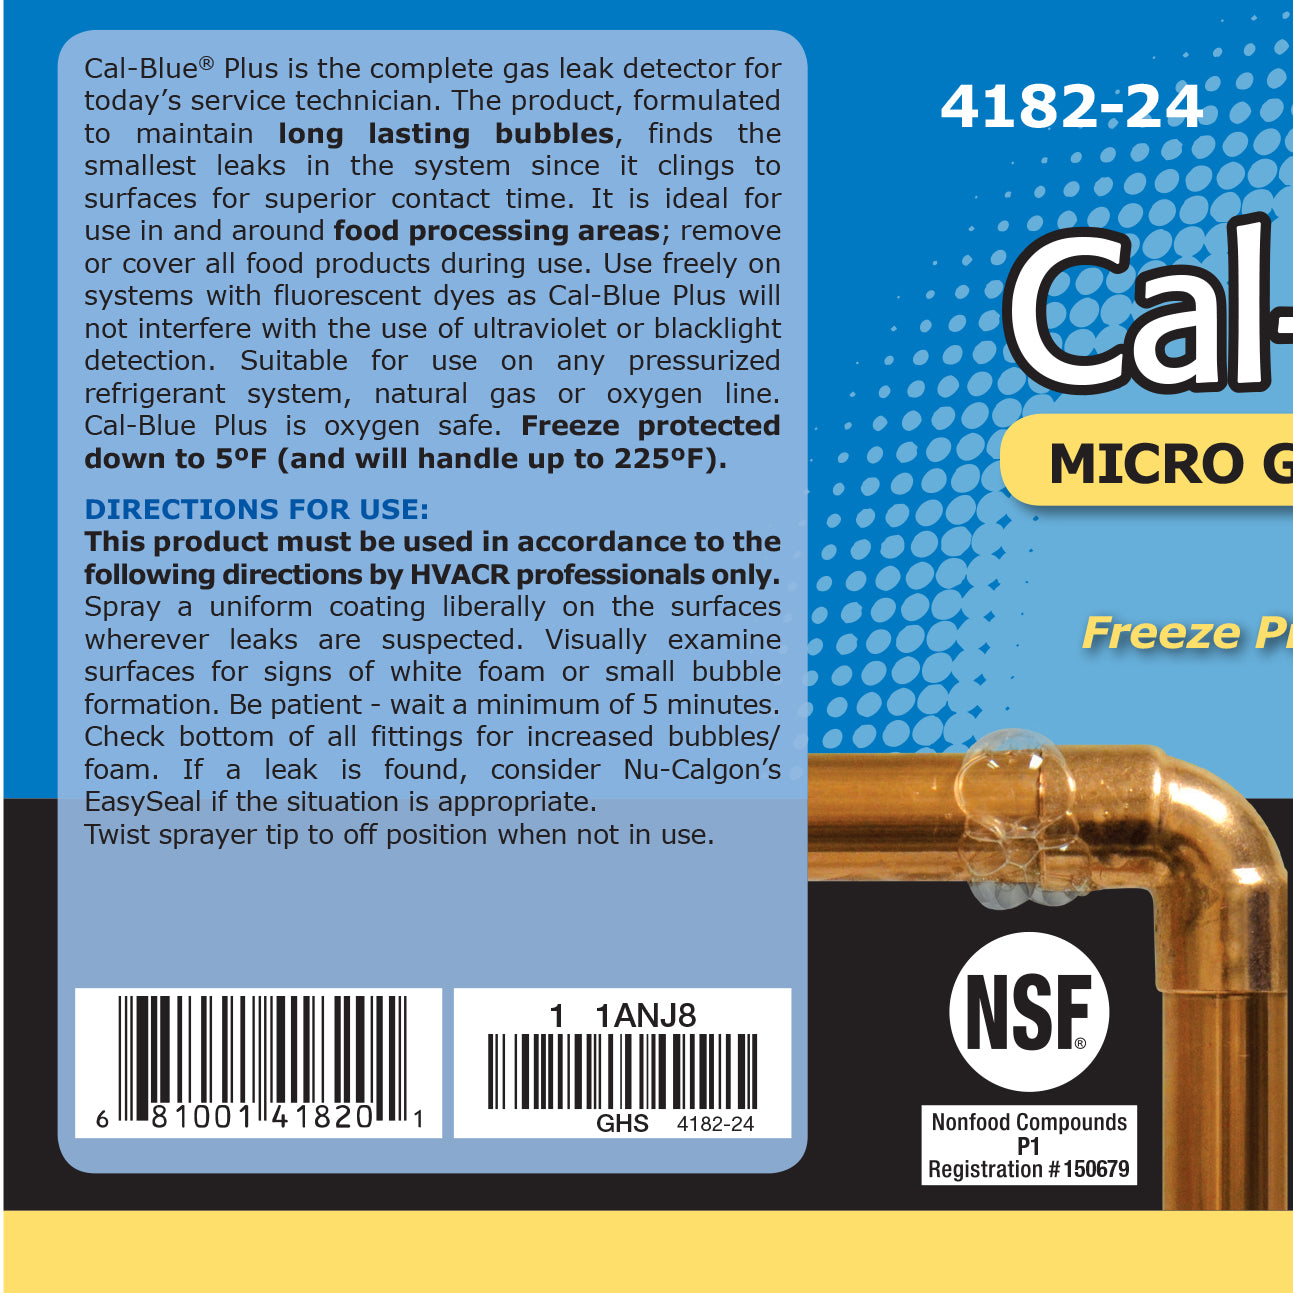 4182-24 - Cal-Blue Plus Micro Gas Leak Detector - 1 Quart